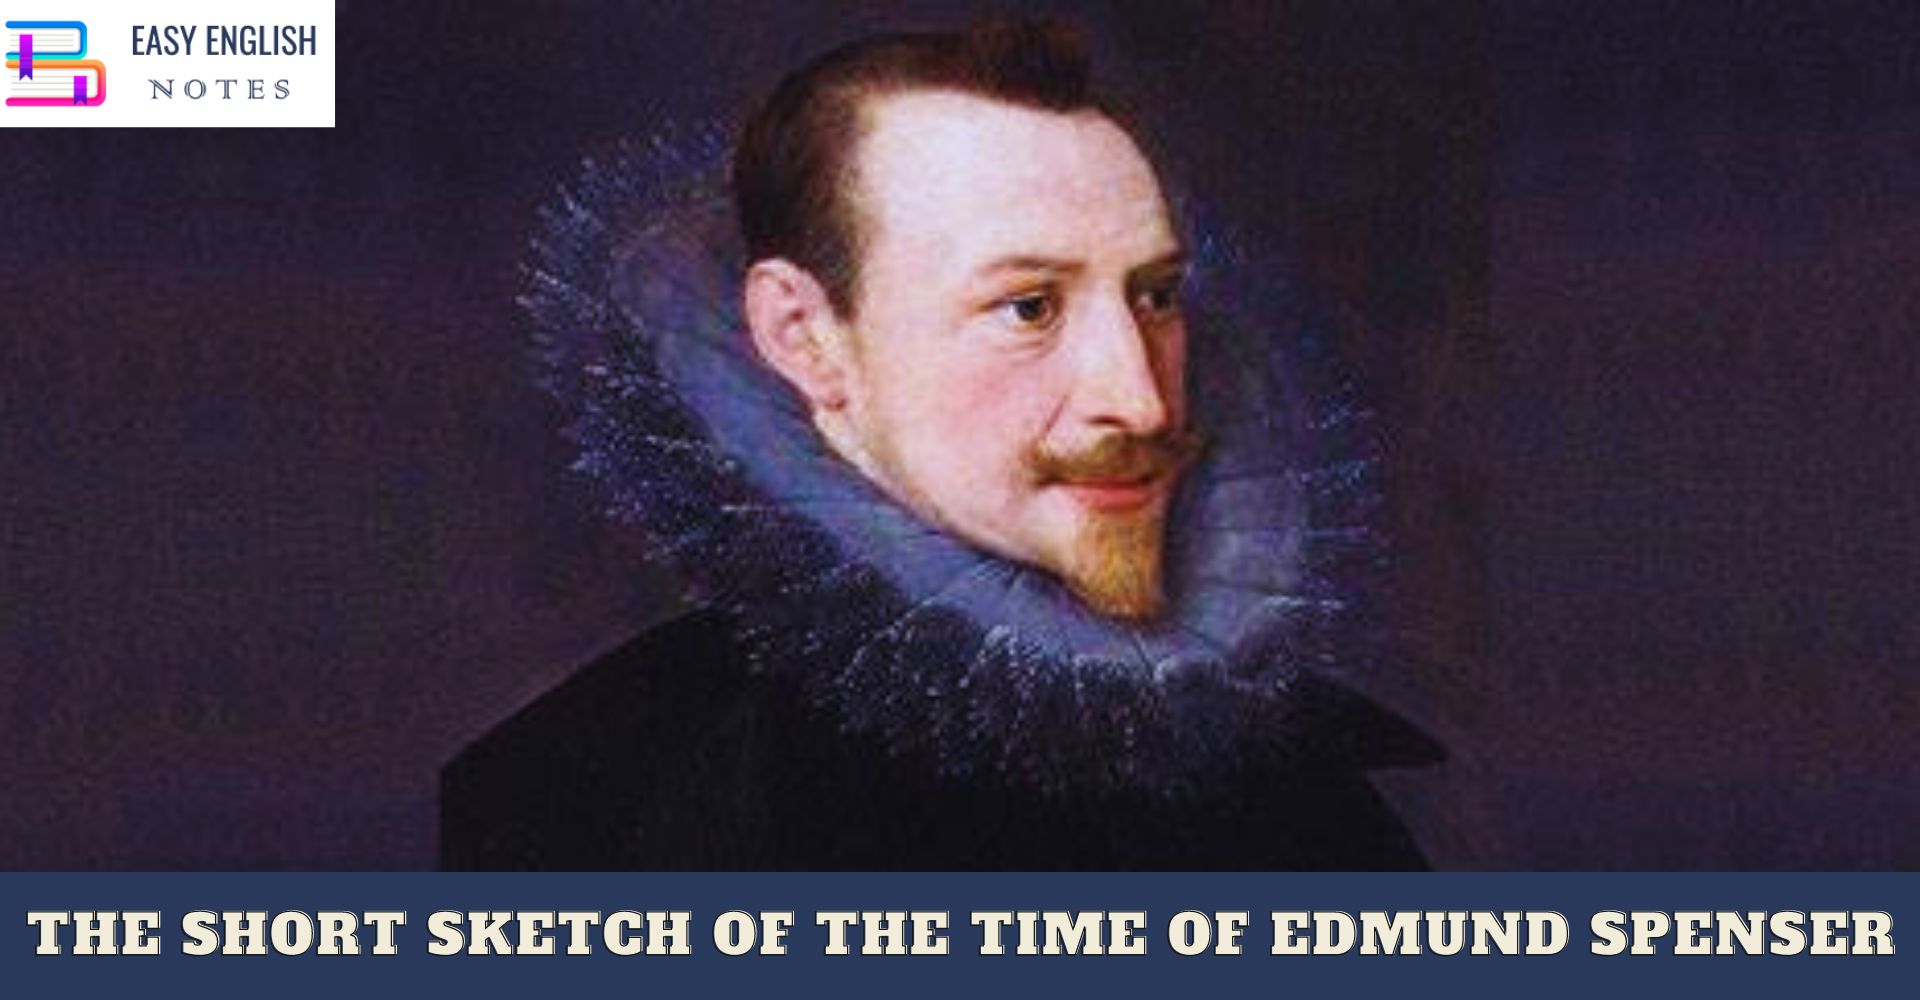 The Short Sketch of the Time of Edmund Spenser